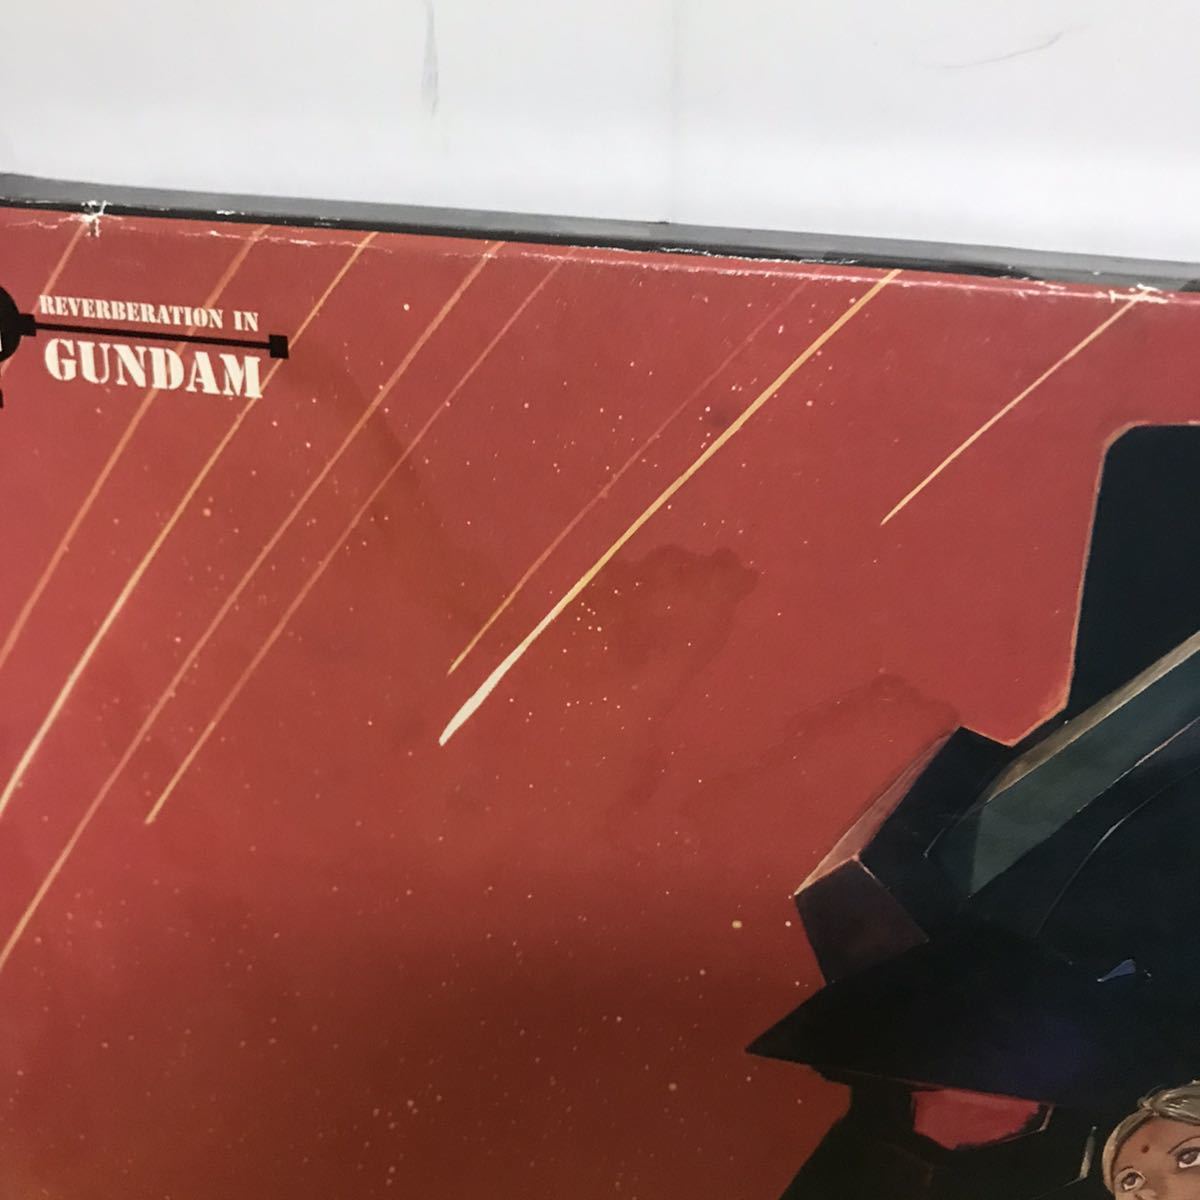 CD-BOX Mobile Suit Gundam 20 anniversary commemoration album CD REVERBERATION in GUNDAM Inoue large .